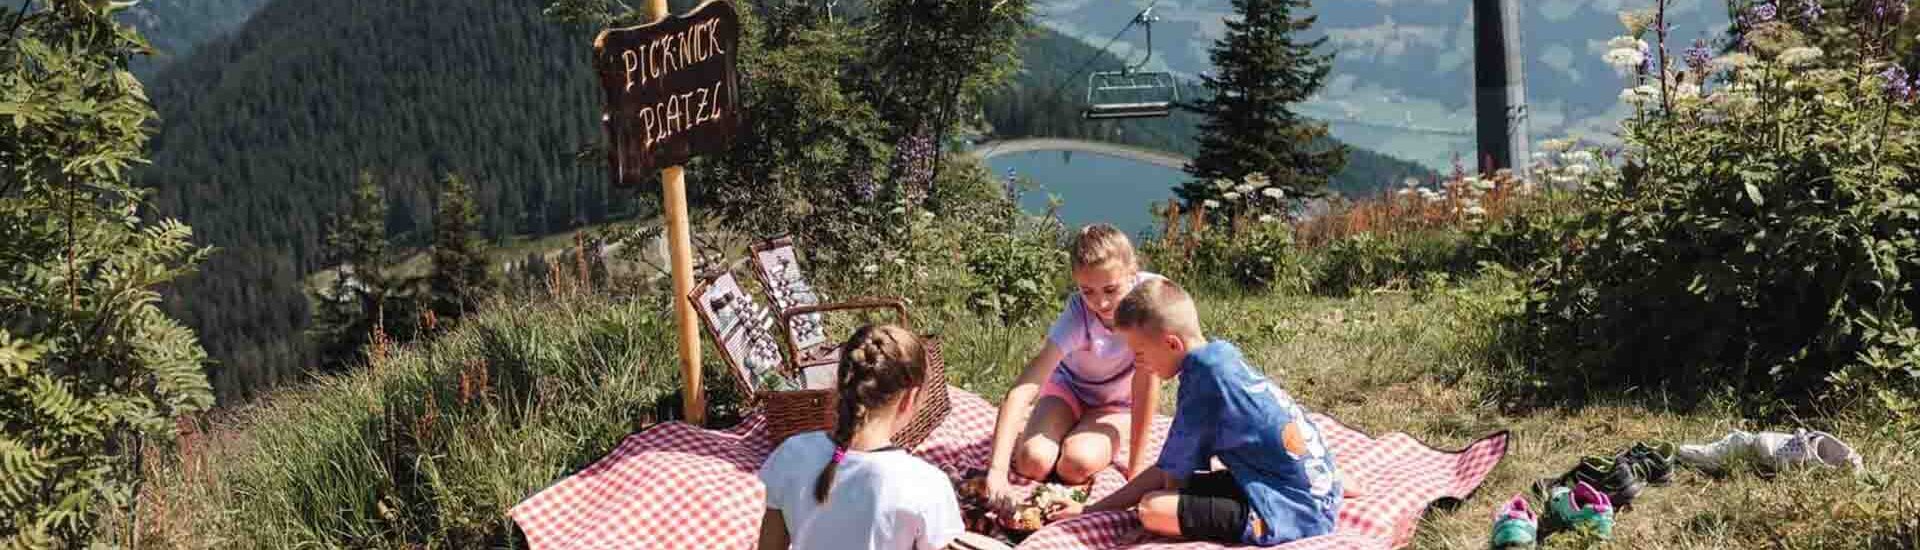 Picknick-am-Berg-Spieljoch-Fügen-Sommer-18